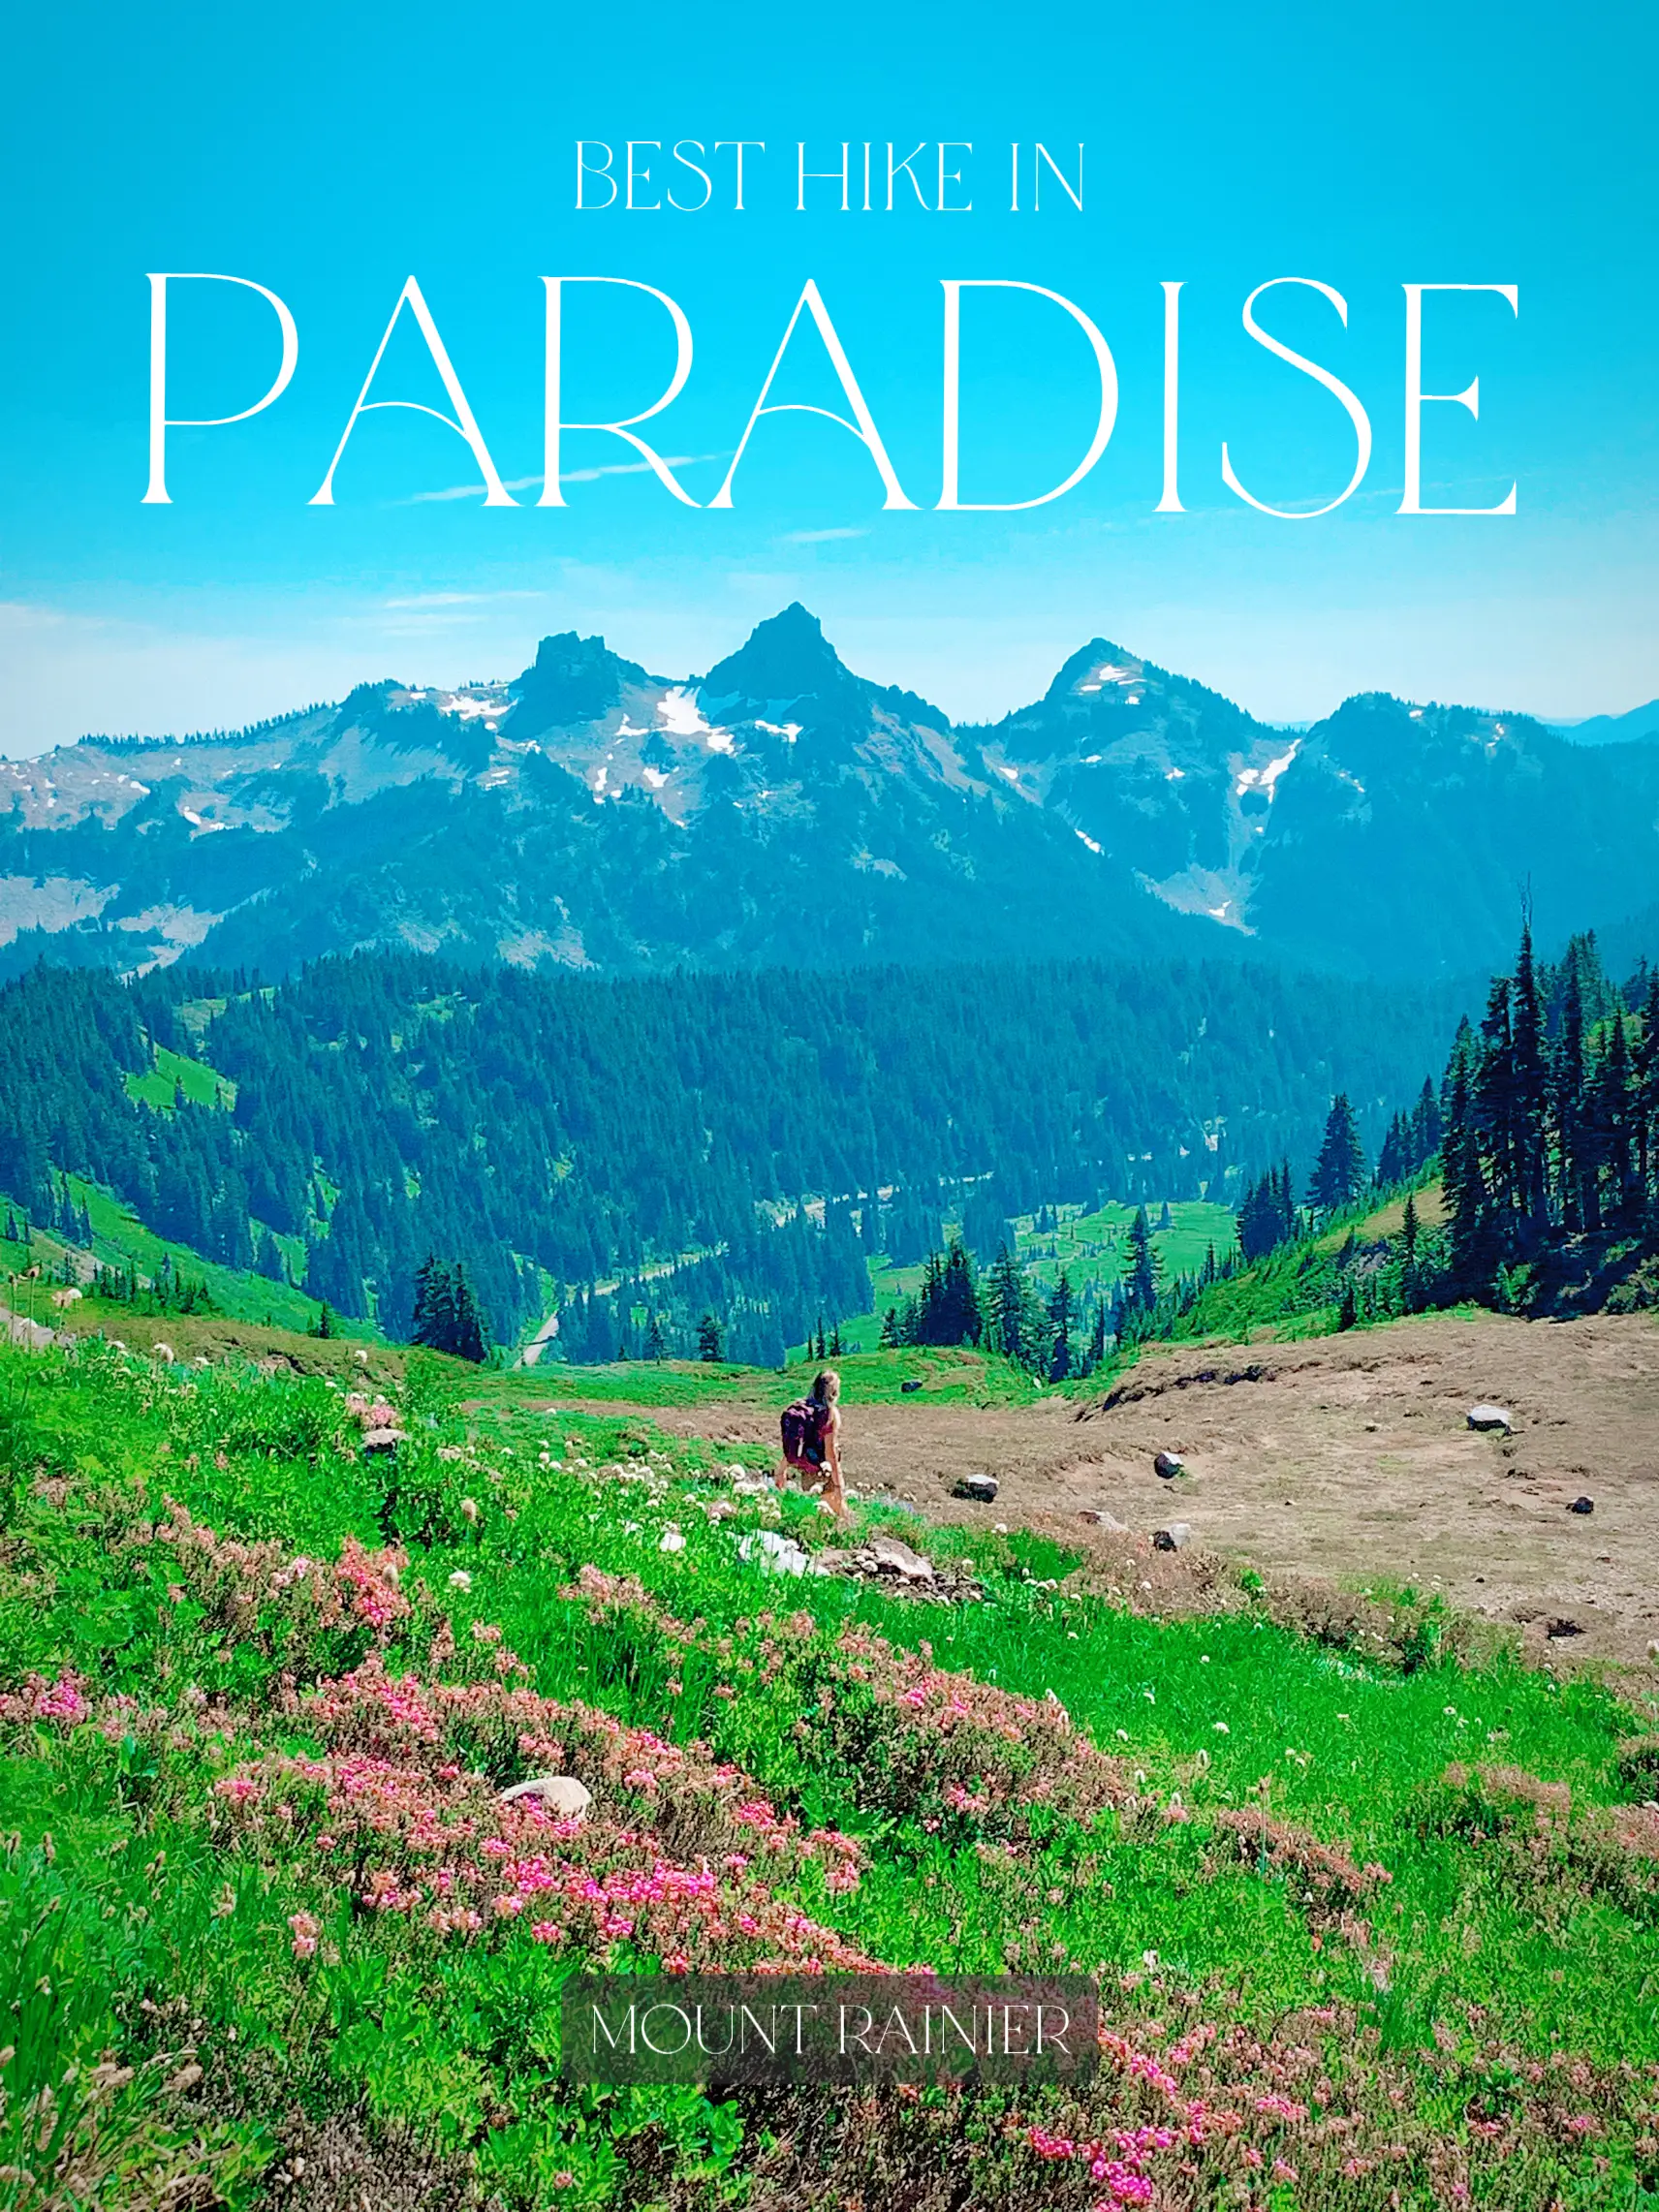 A hike into 'Paradise